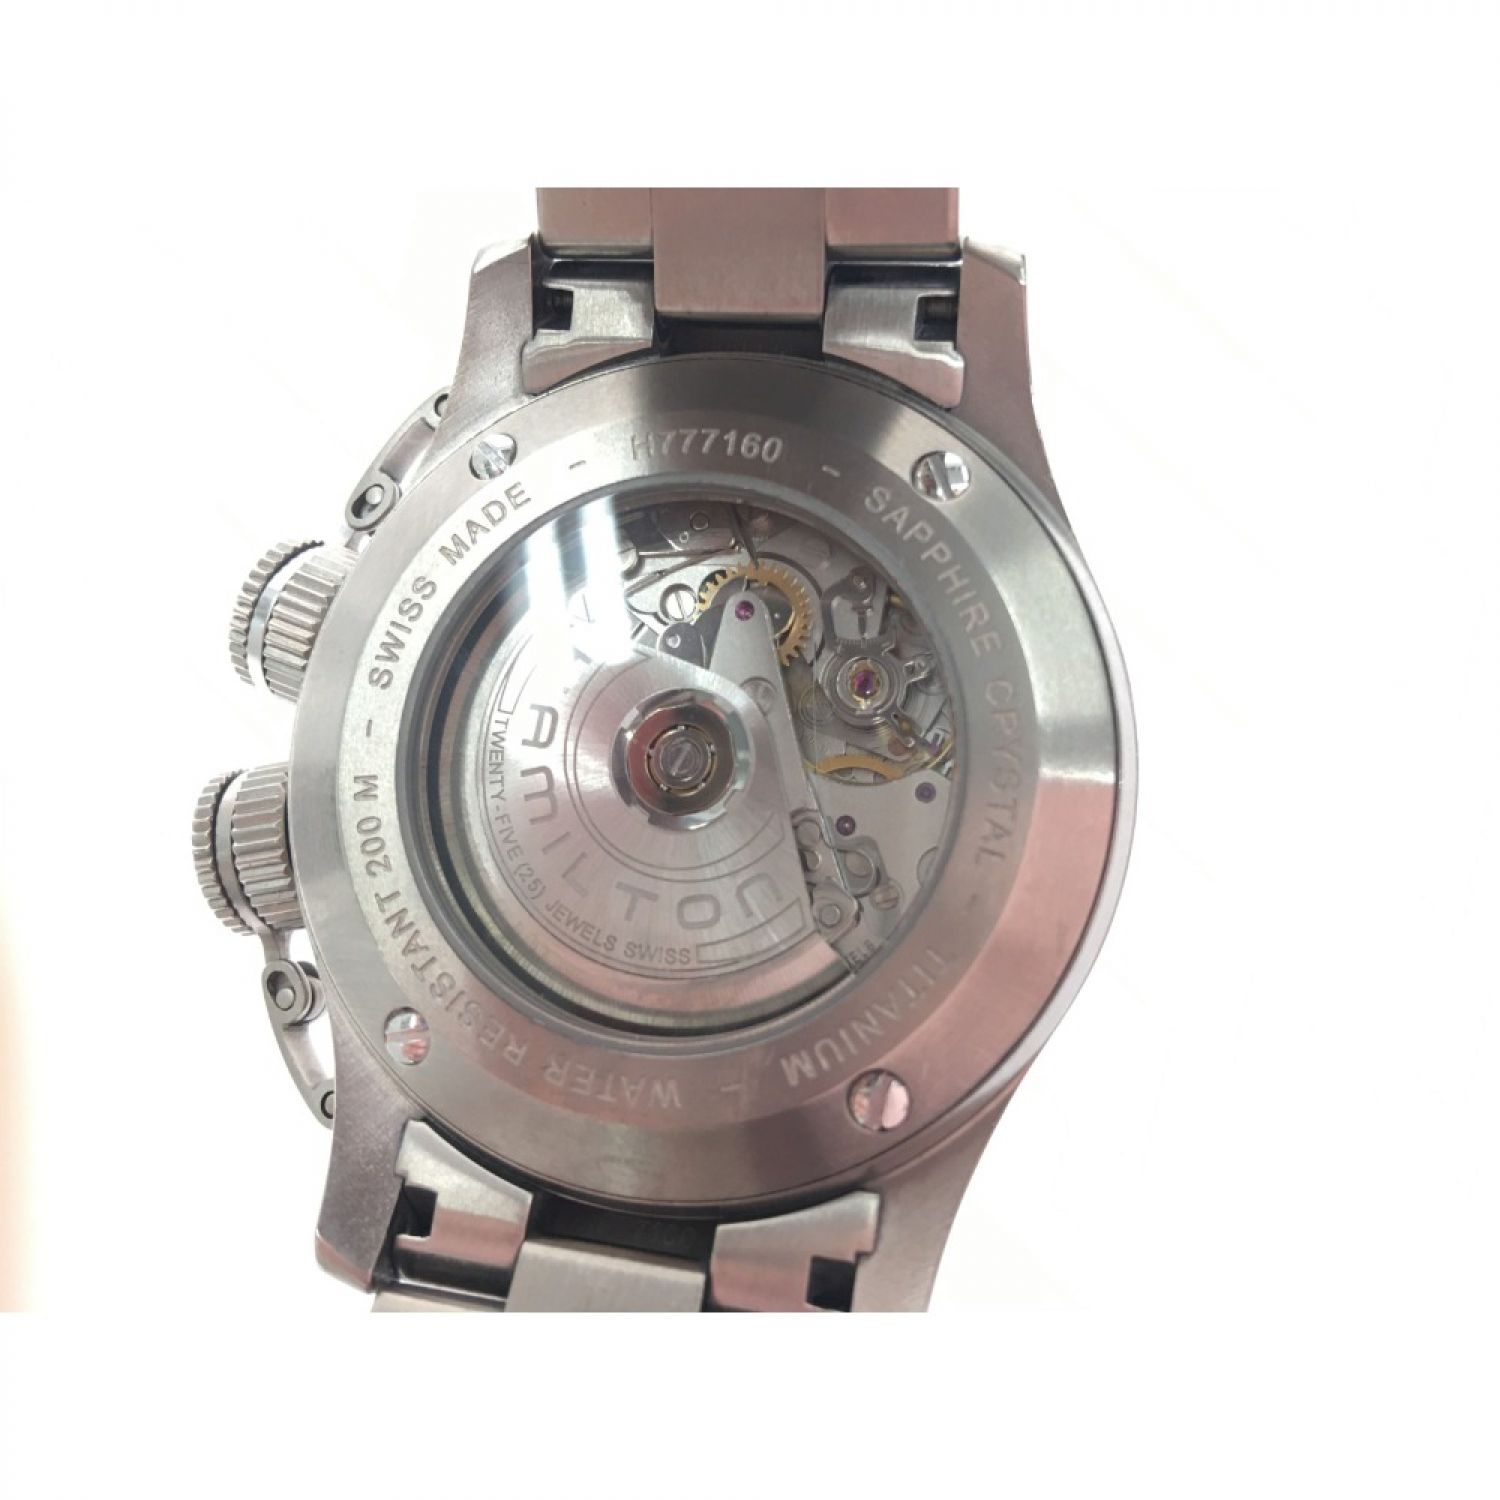 ▼▼HAMILTON ハミルトン メンズ腕時計 自動巻き カーキ  H77716353